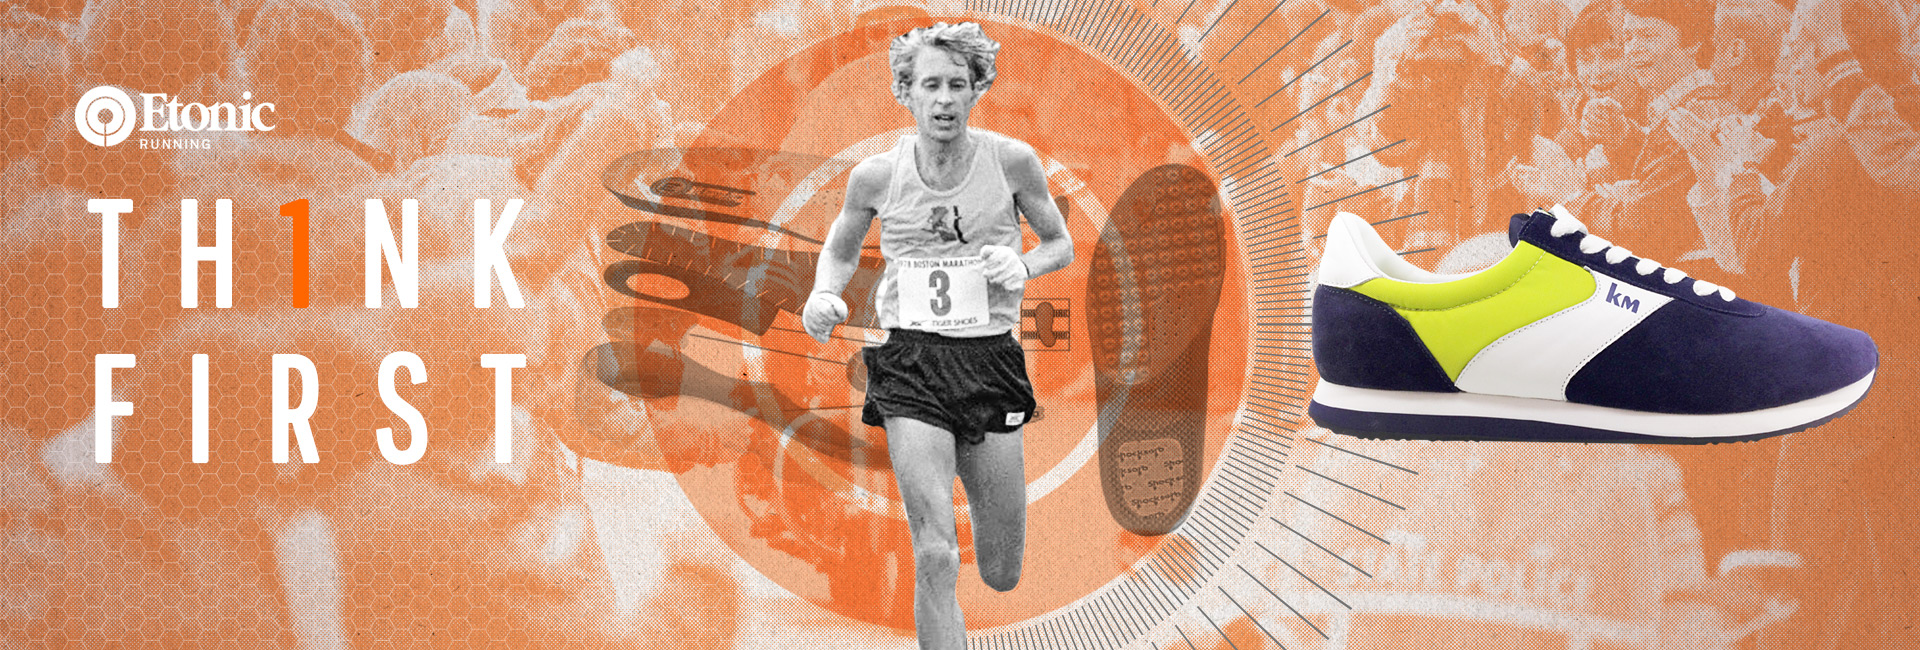 Etonic promotional graphic with Marathon Runner